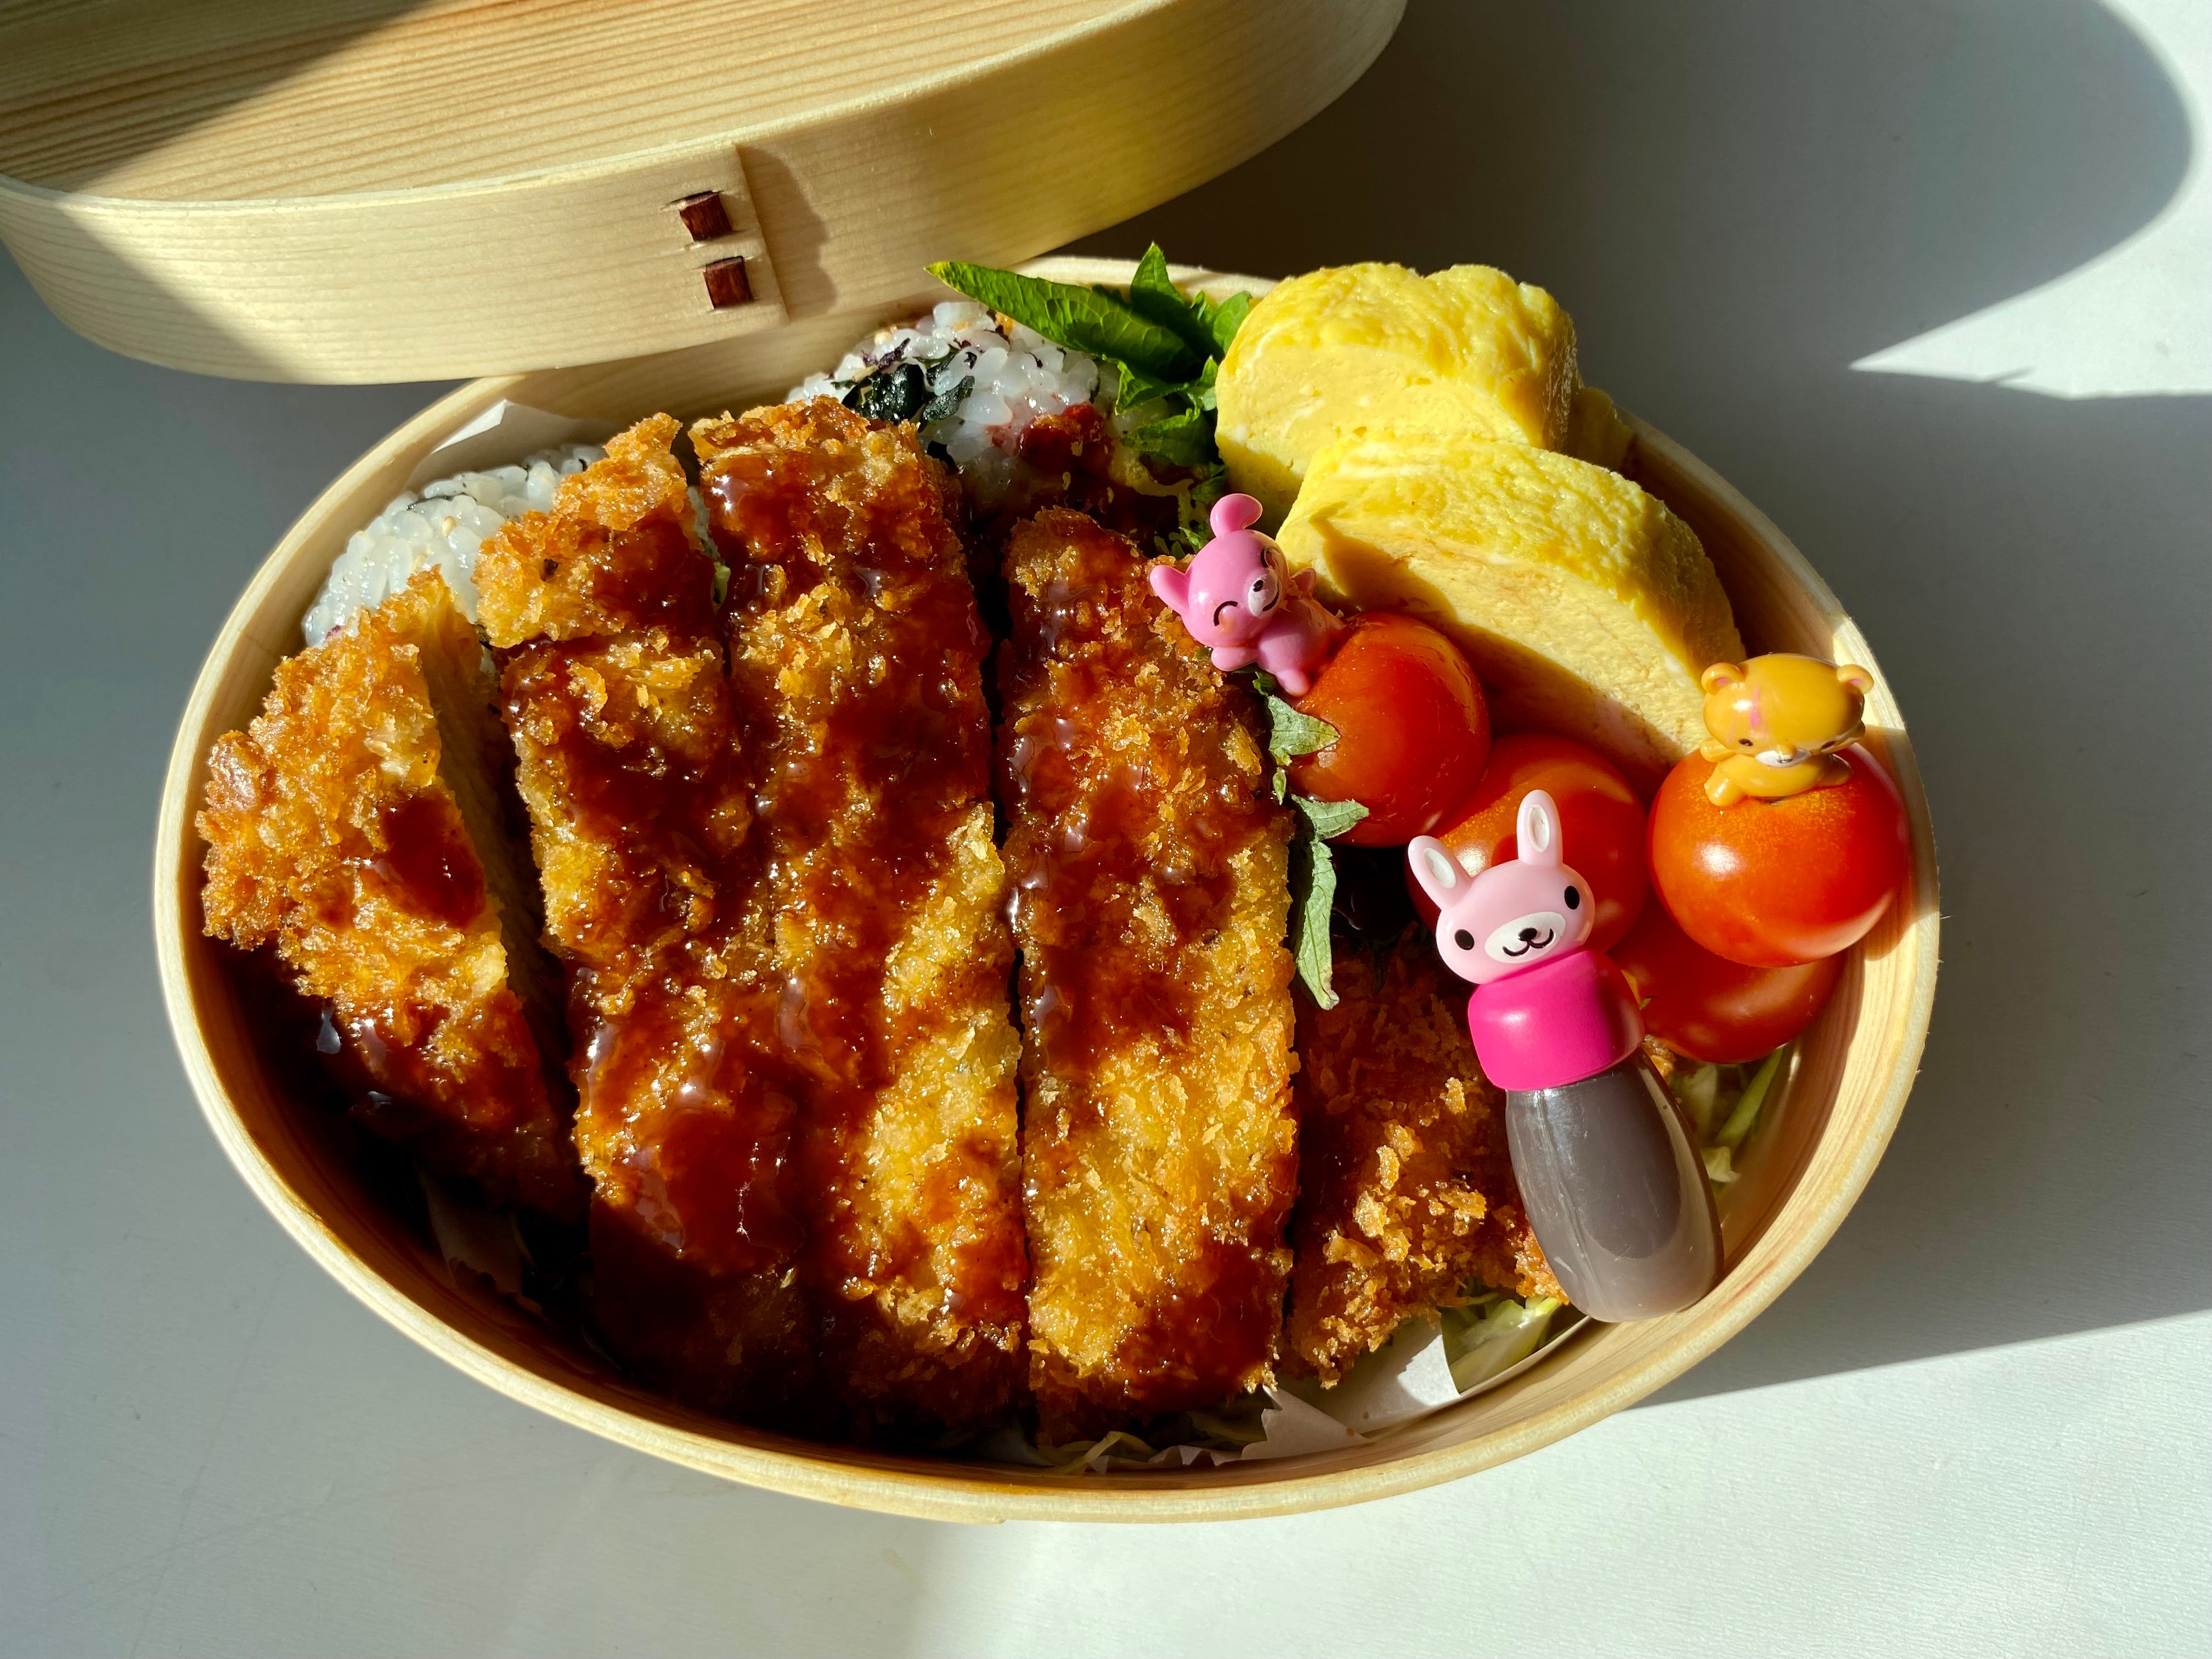 Japanese BENTO BOX Lunch Ideas #1 - Miso Tonkatsu, etc. Recipes for  Beginners 